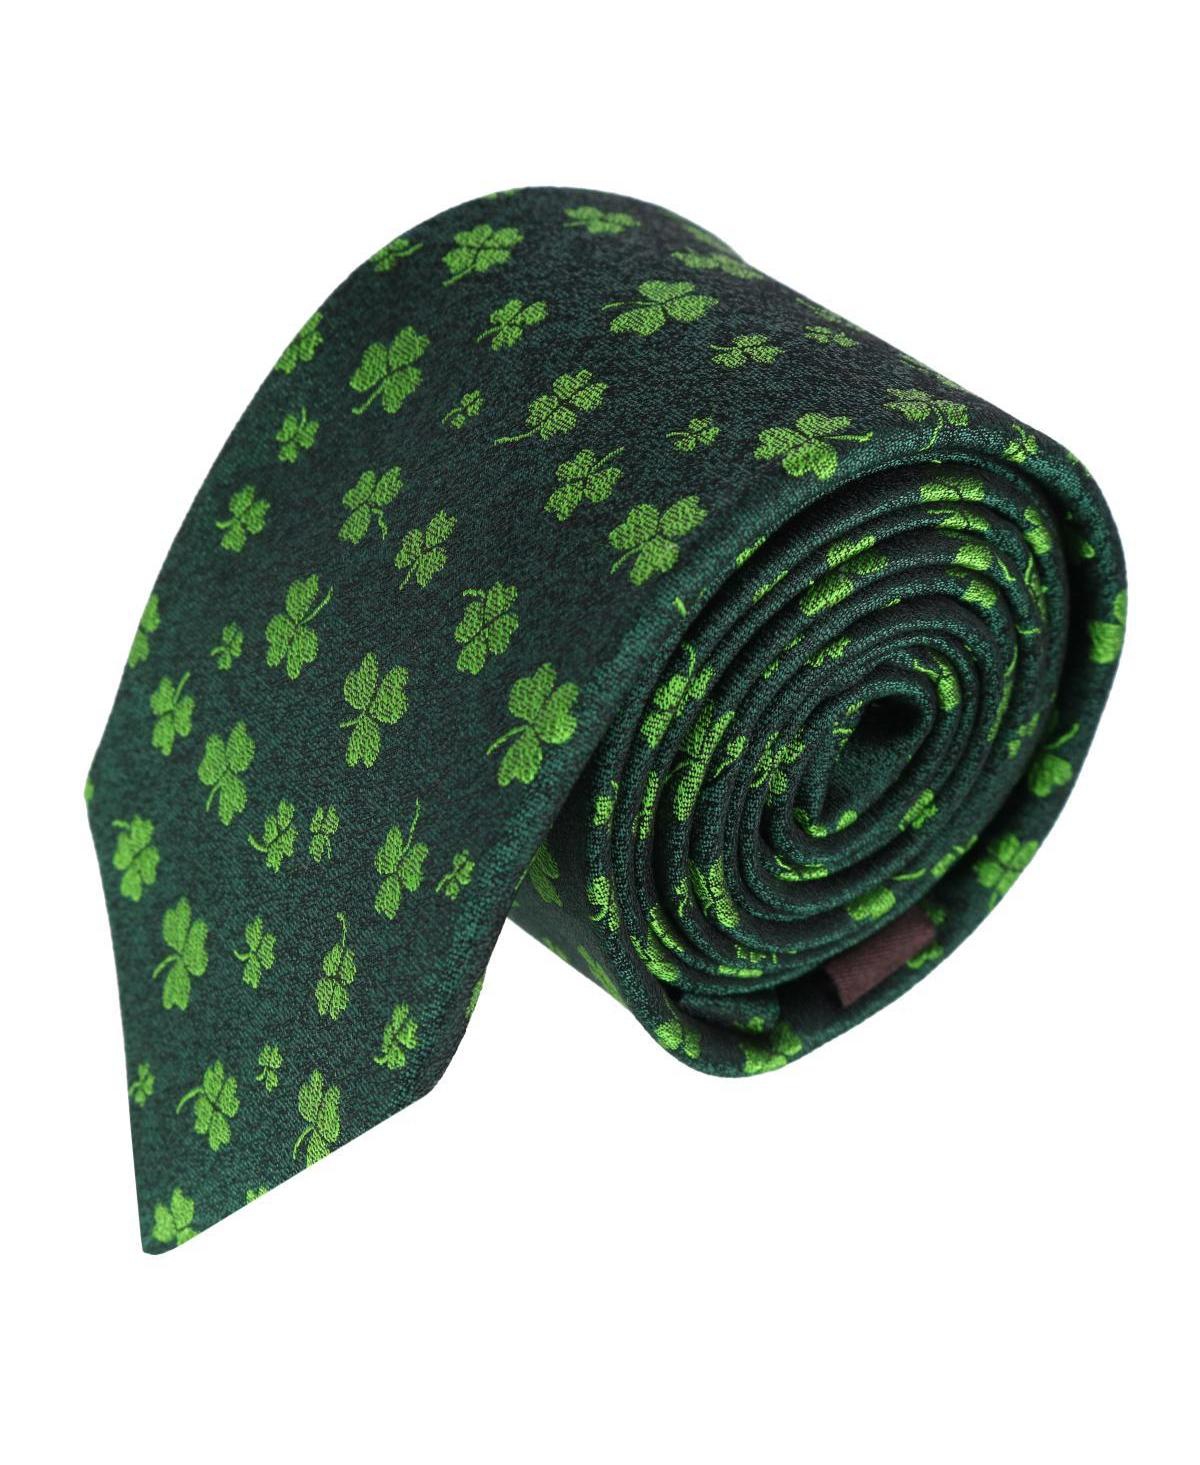 Men's Green Shamrock Novelty Silk Necktie - Green shamrocks